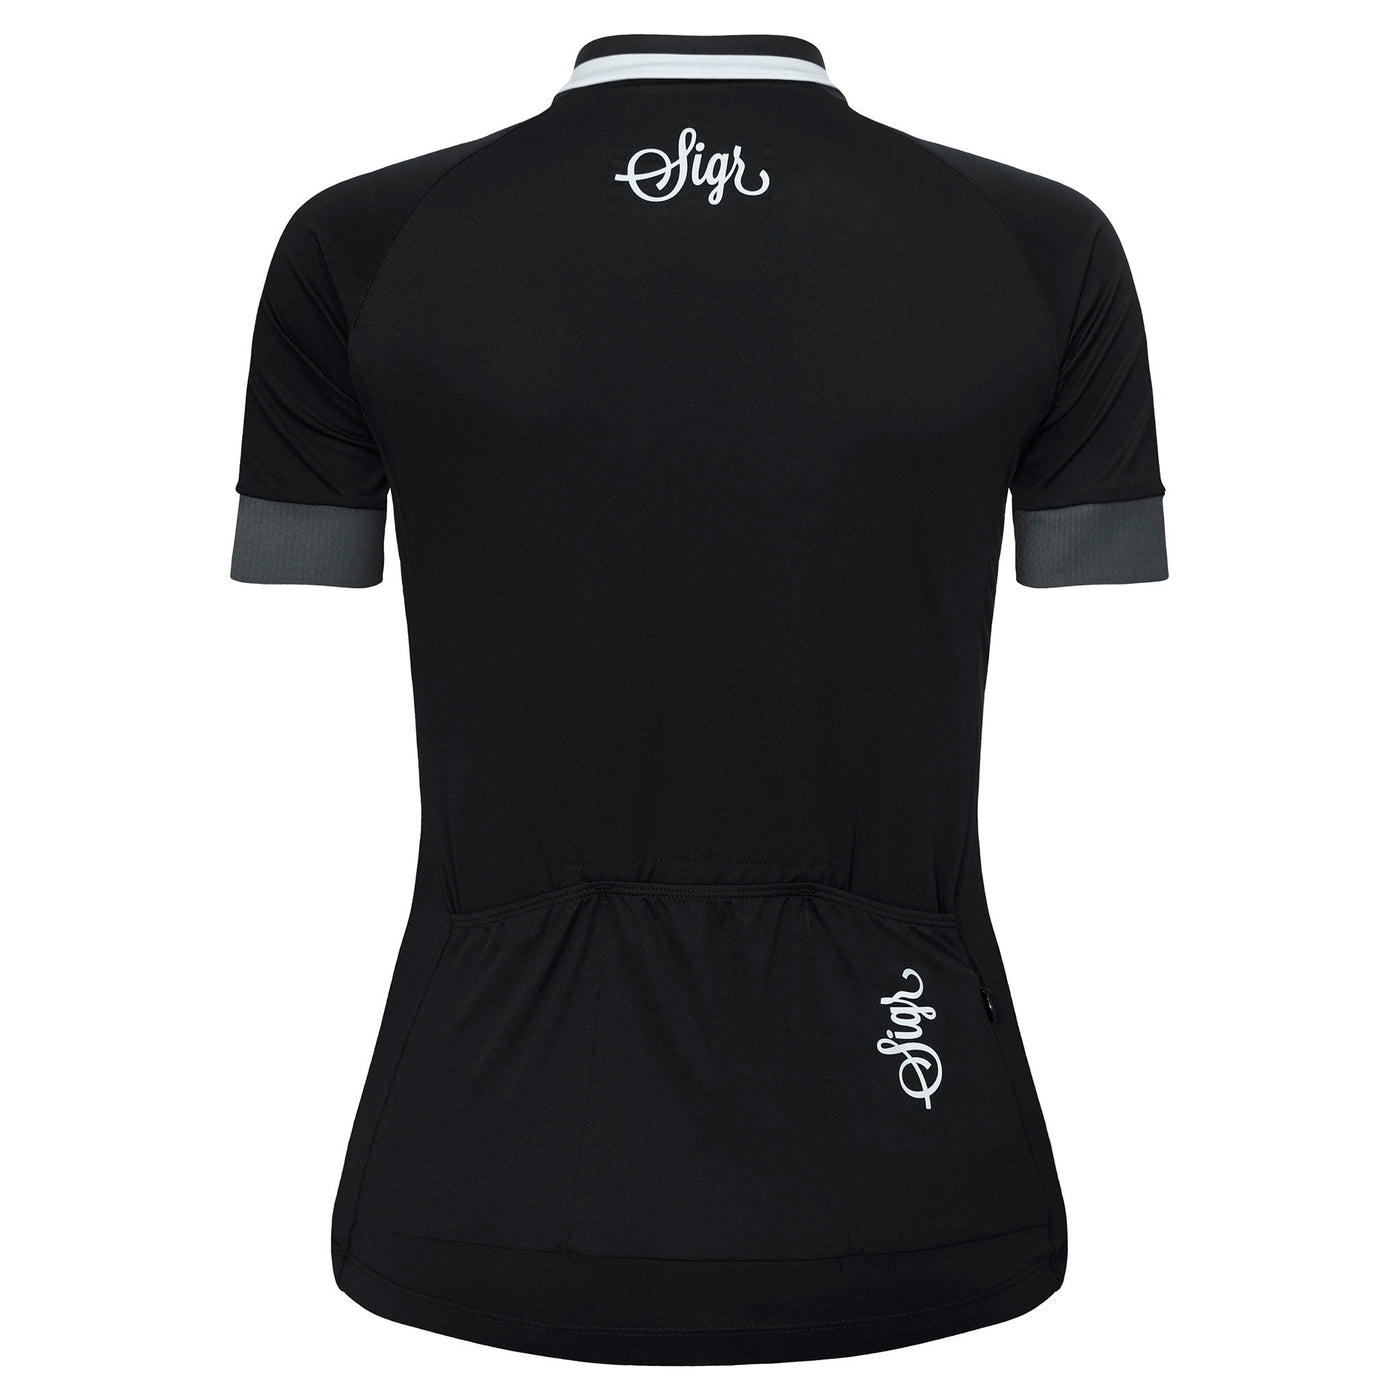 Sigr Svart Grus - Black Cycling Jersey for Women